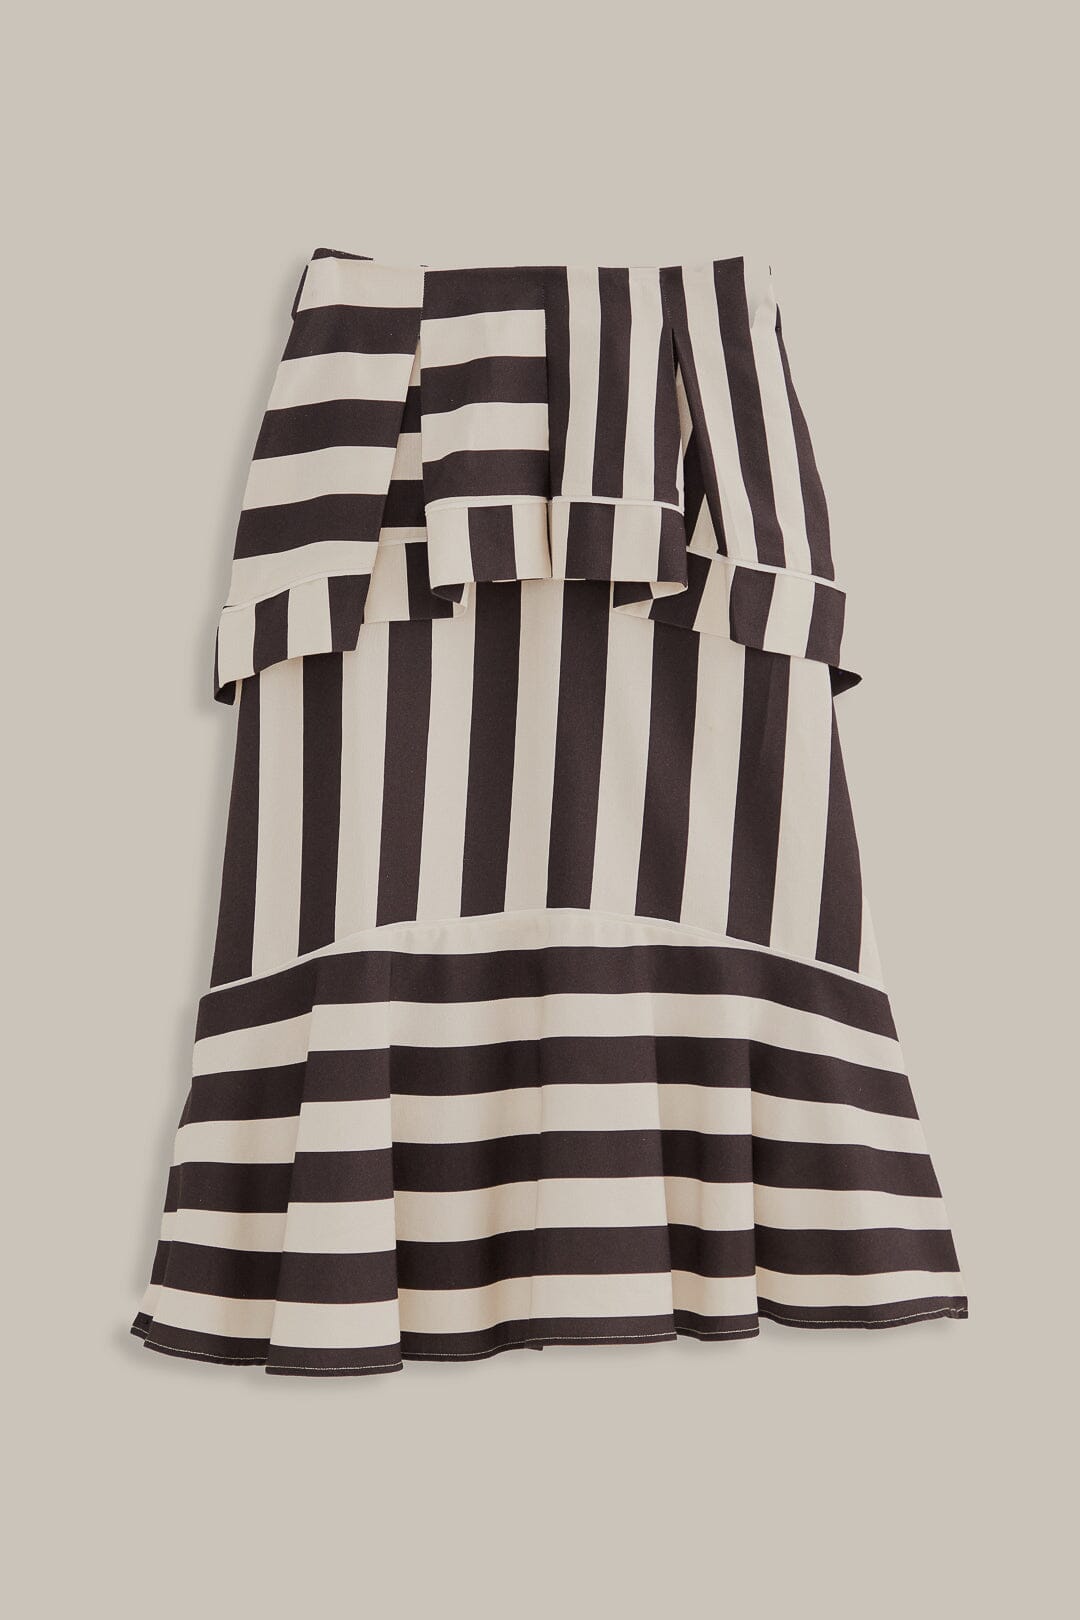 Mixed Stripes Black Midi Skirt